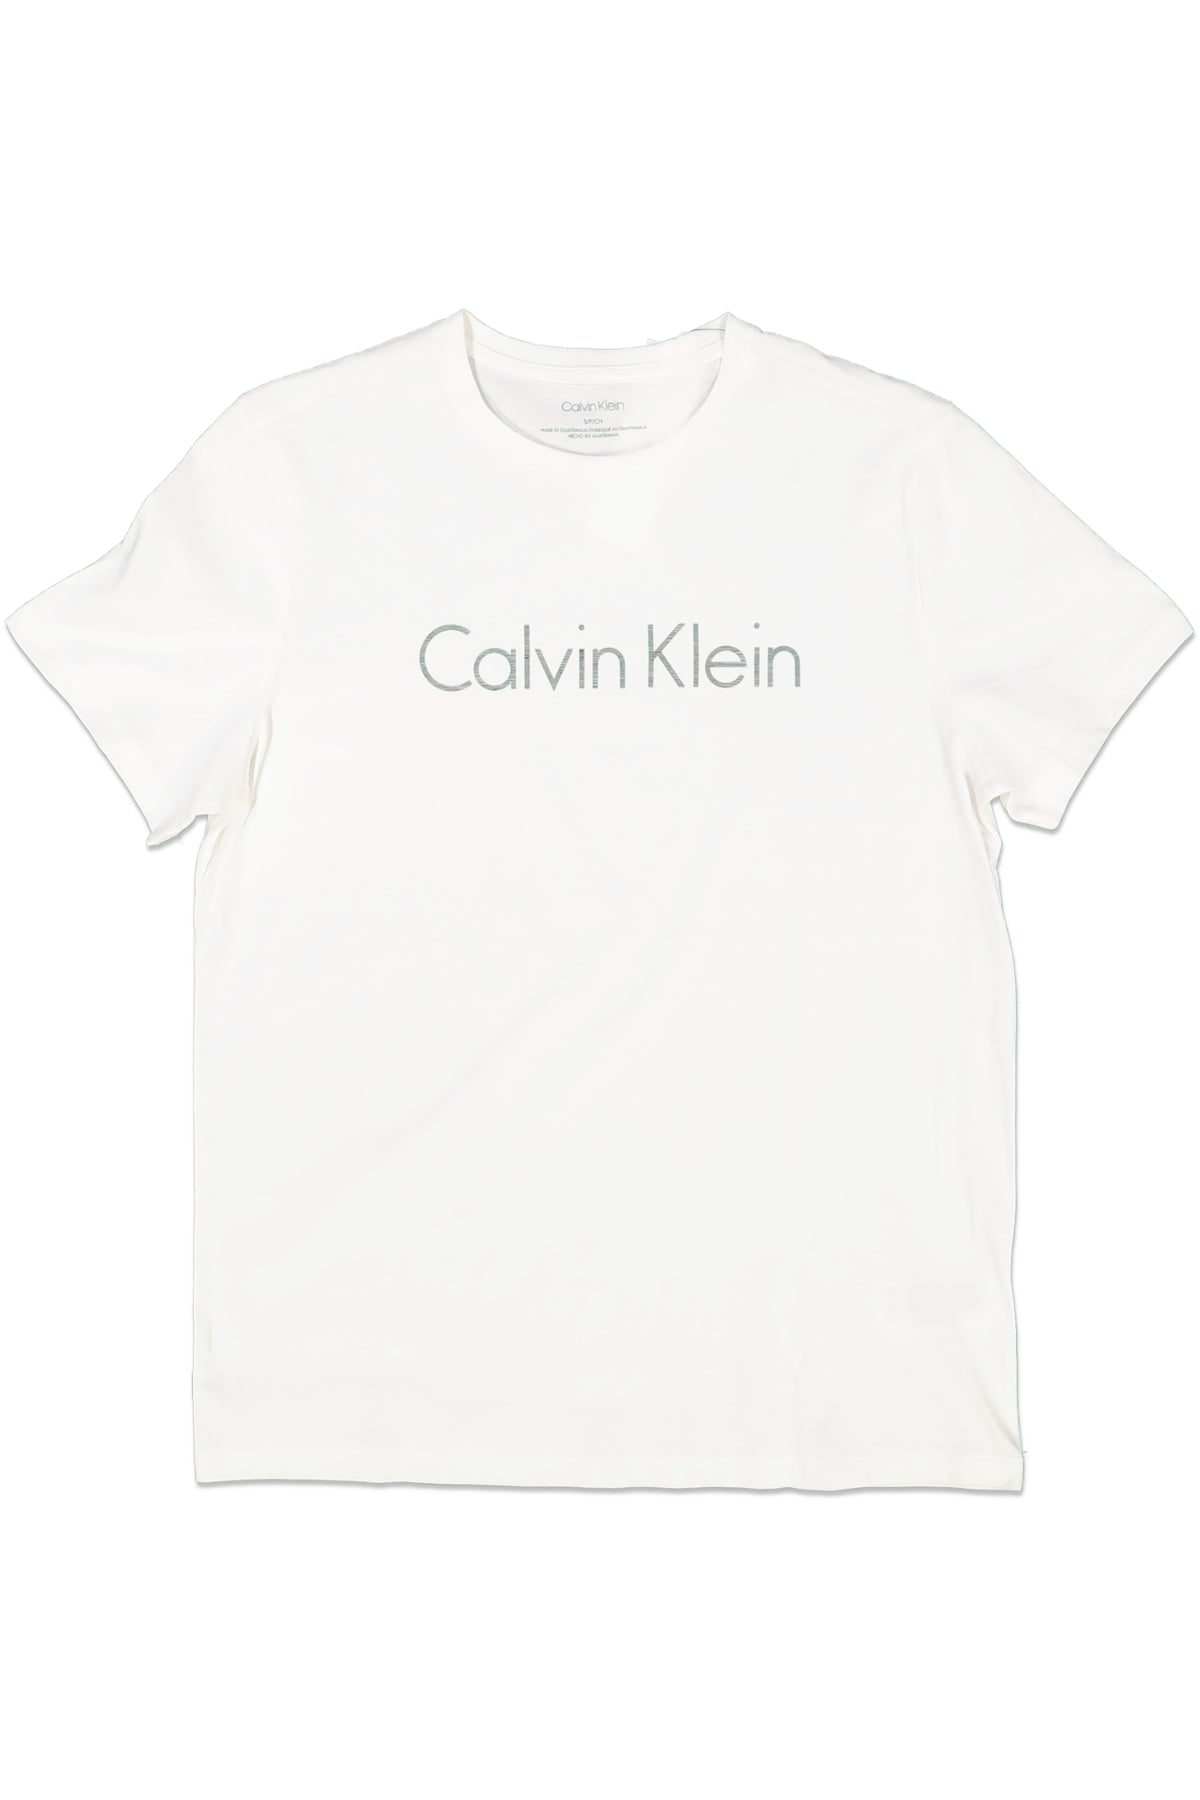 CALVIN KLEIN S/S CREW JERSEY TEE WHITE